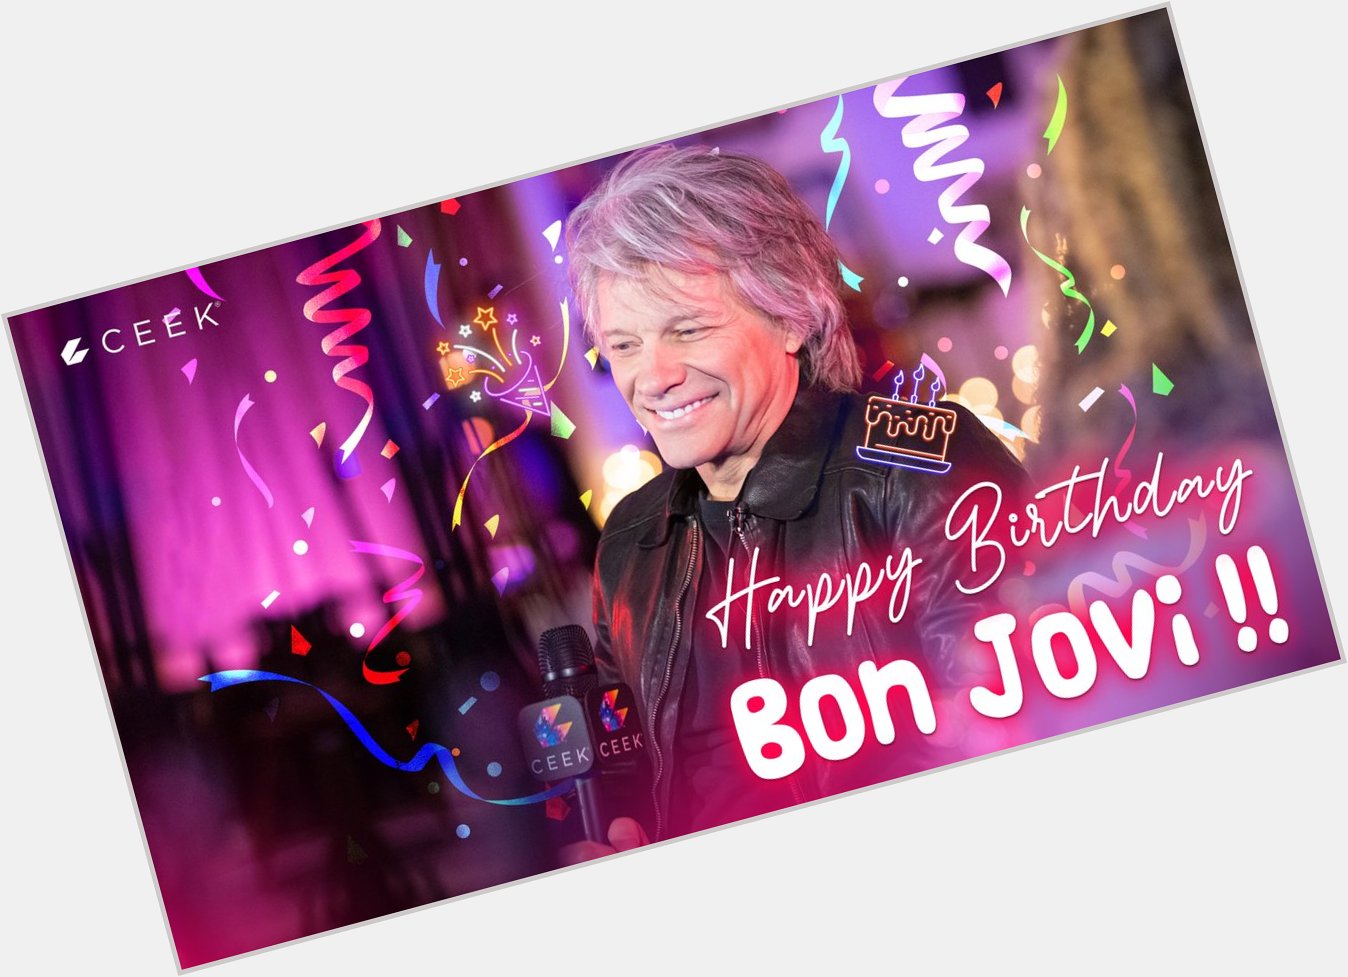 Happy Birthday Jon Bon Jovi! Enjoy exclusives  on   $Ceek 